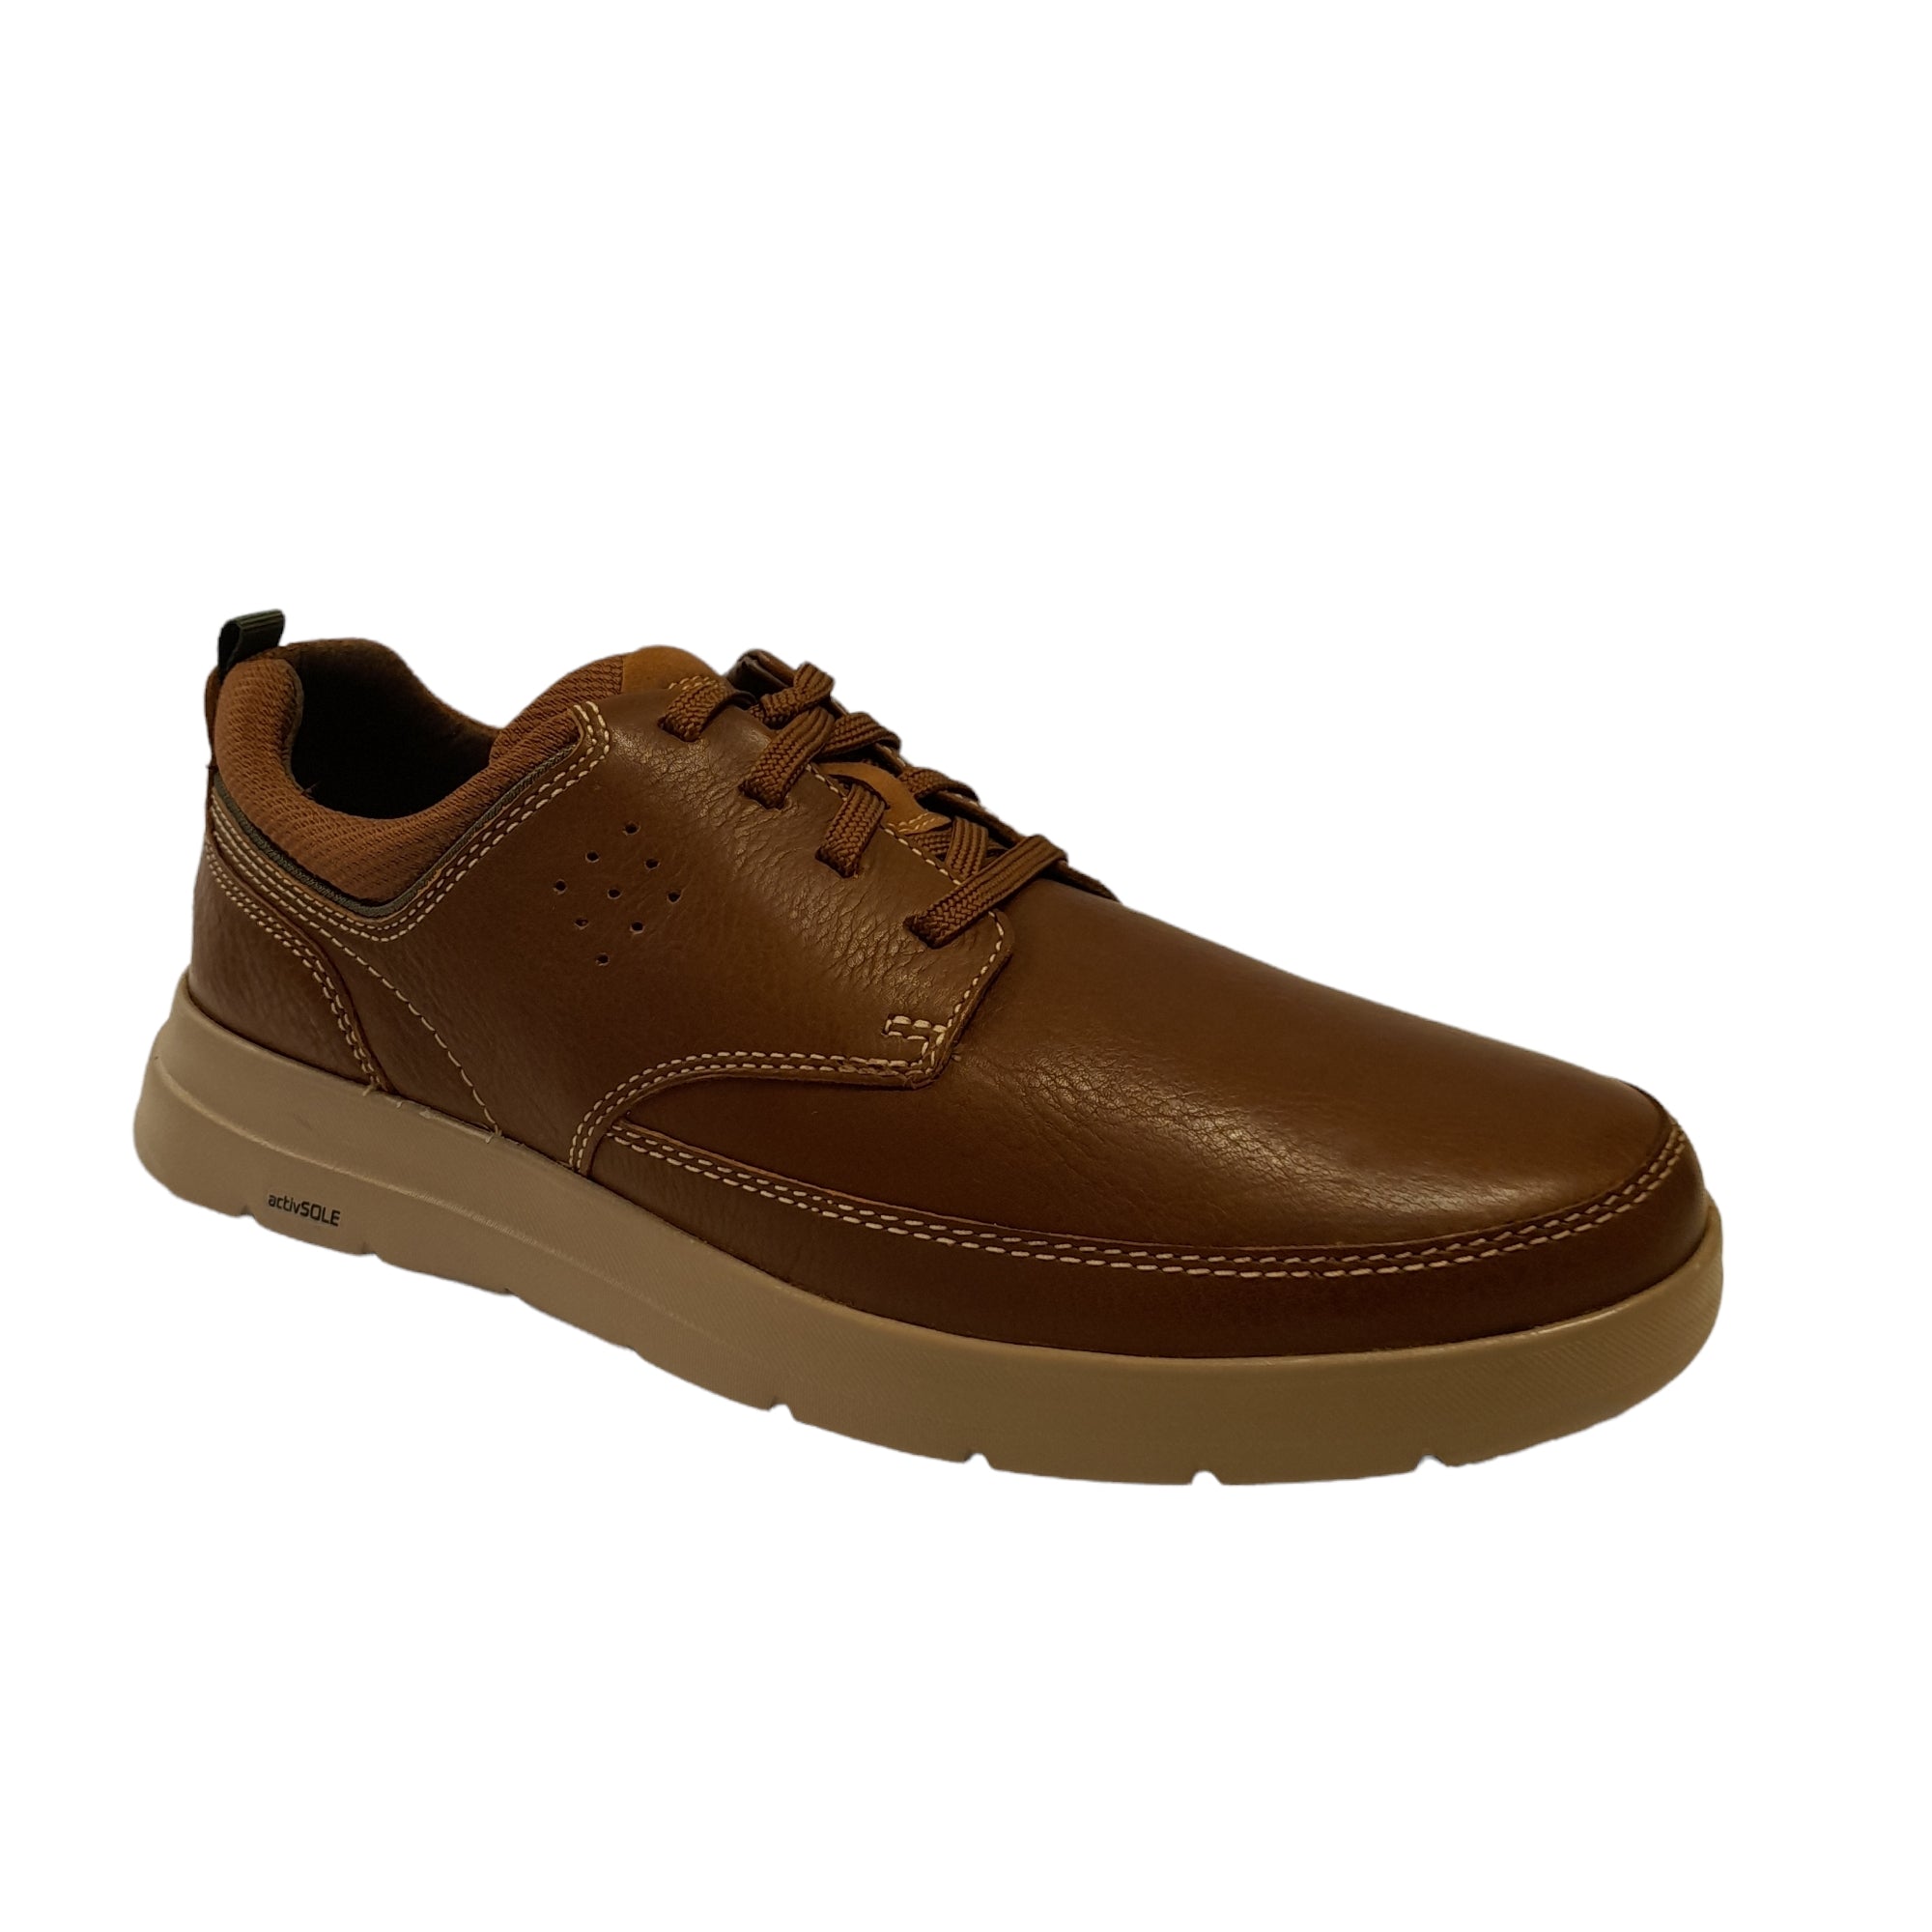 M Cayden PT - shoe&me - Rockport - Shoe - Mens, Shoes